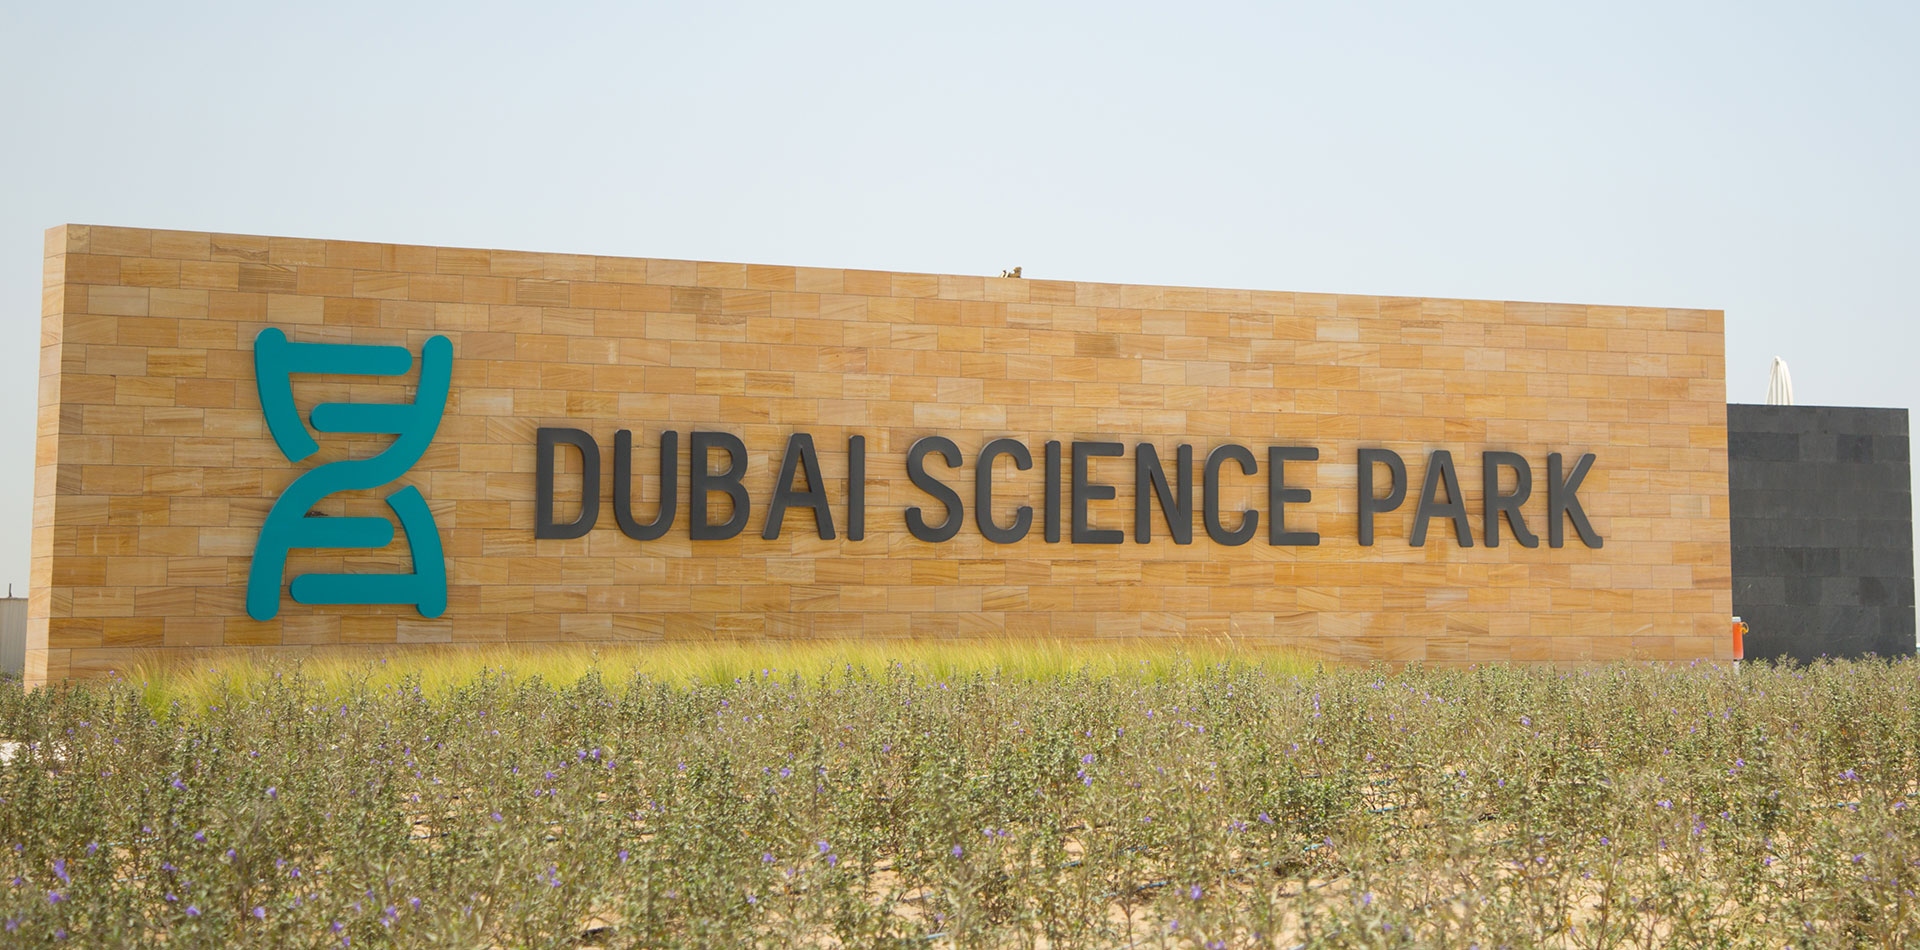 Monument Signage of Dubai Science Park